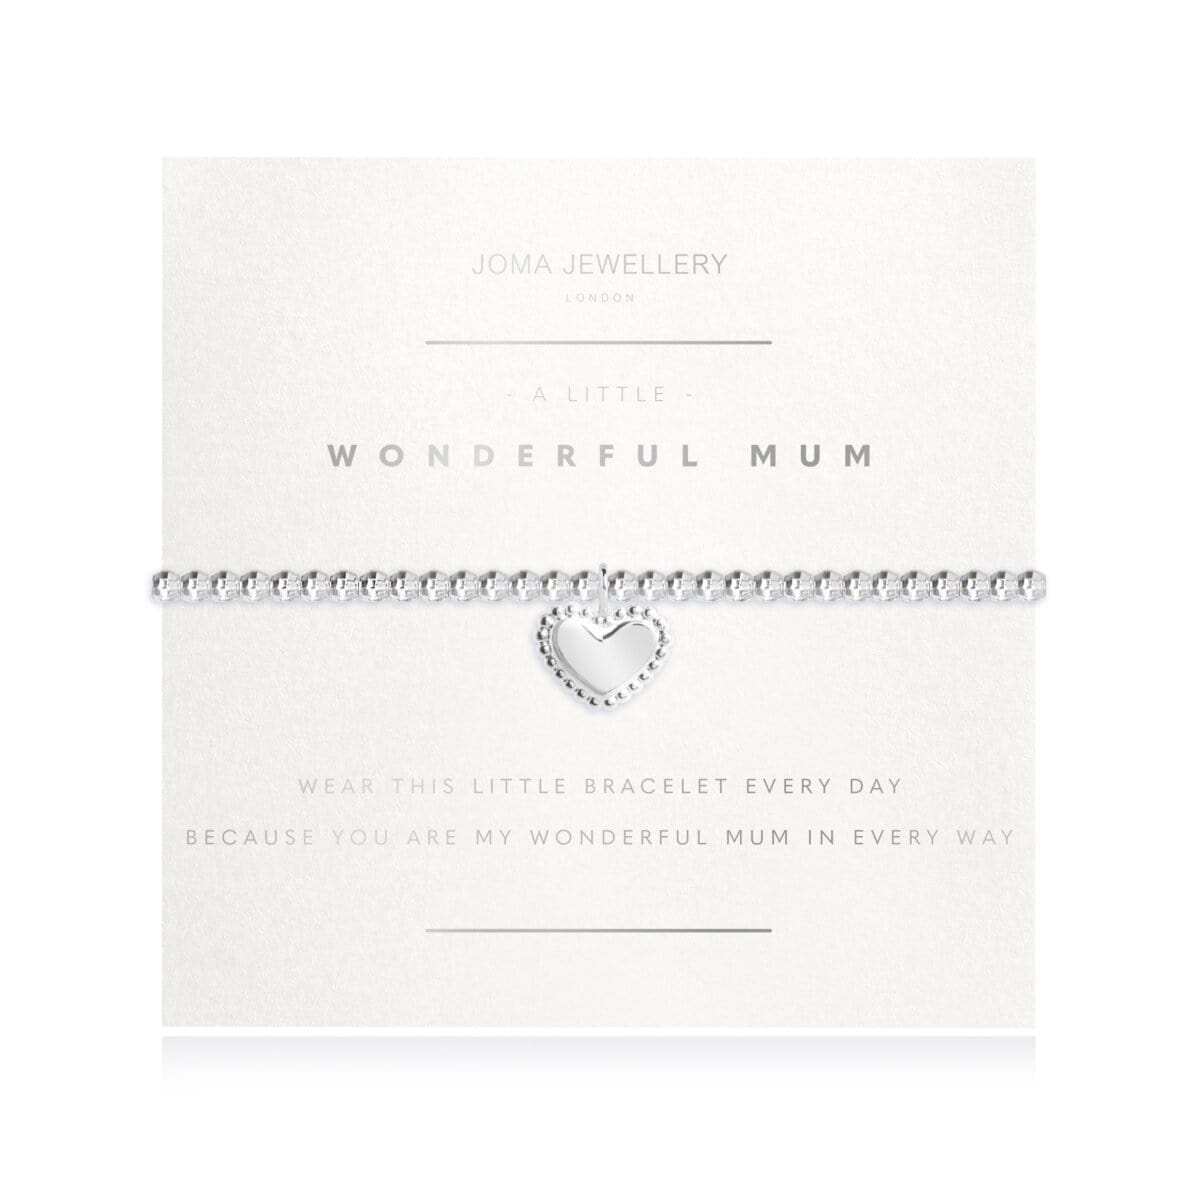 Joma Jewellery Bracelet Joma Jewellery Bracelet - A Little Faceted Wonderful Mum